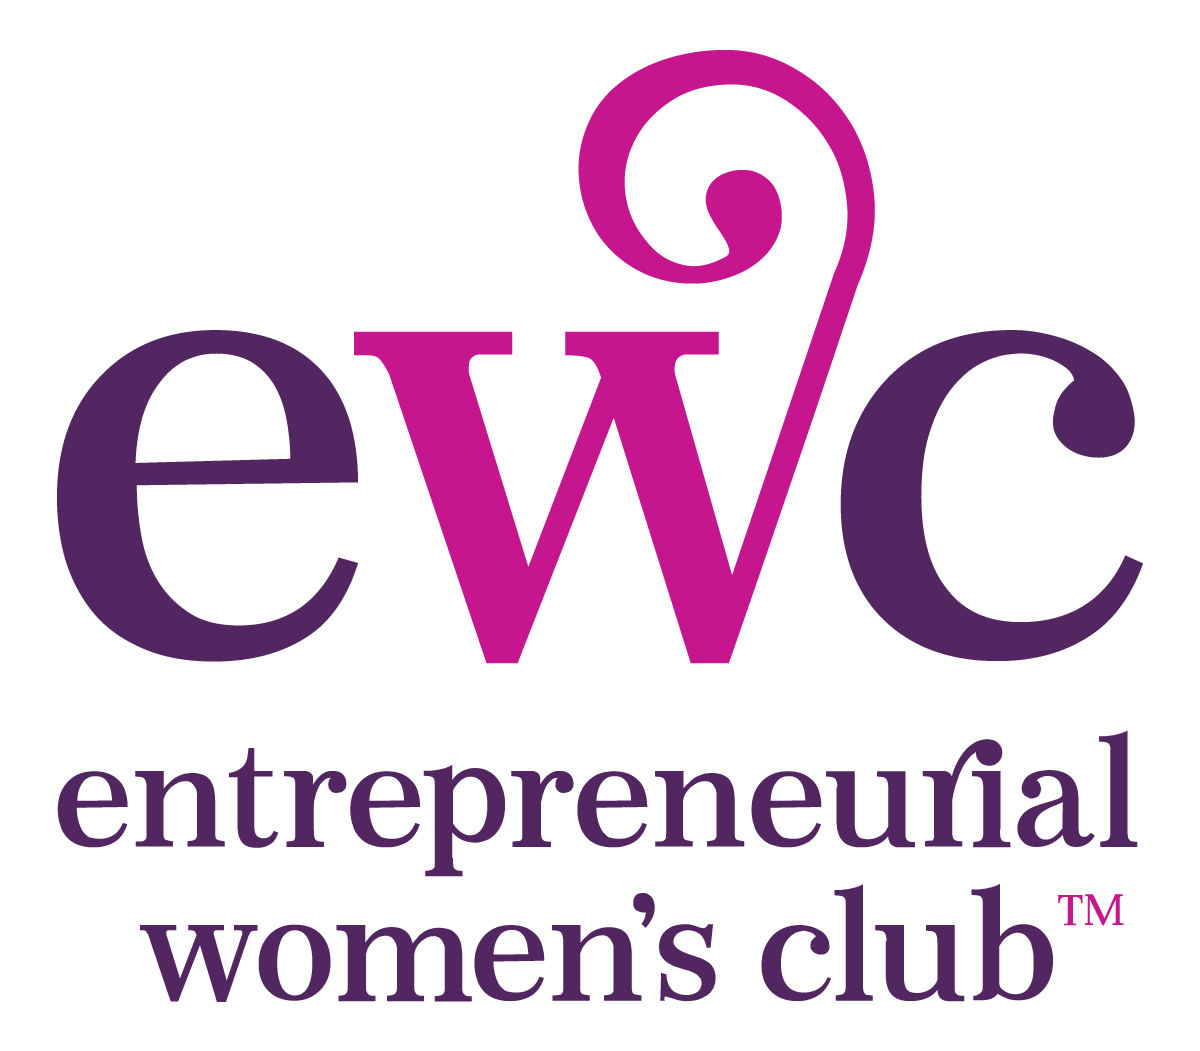 Fairfield Network of Executive Women